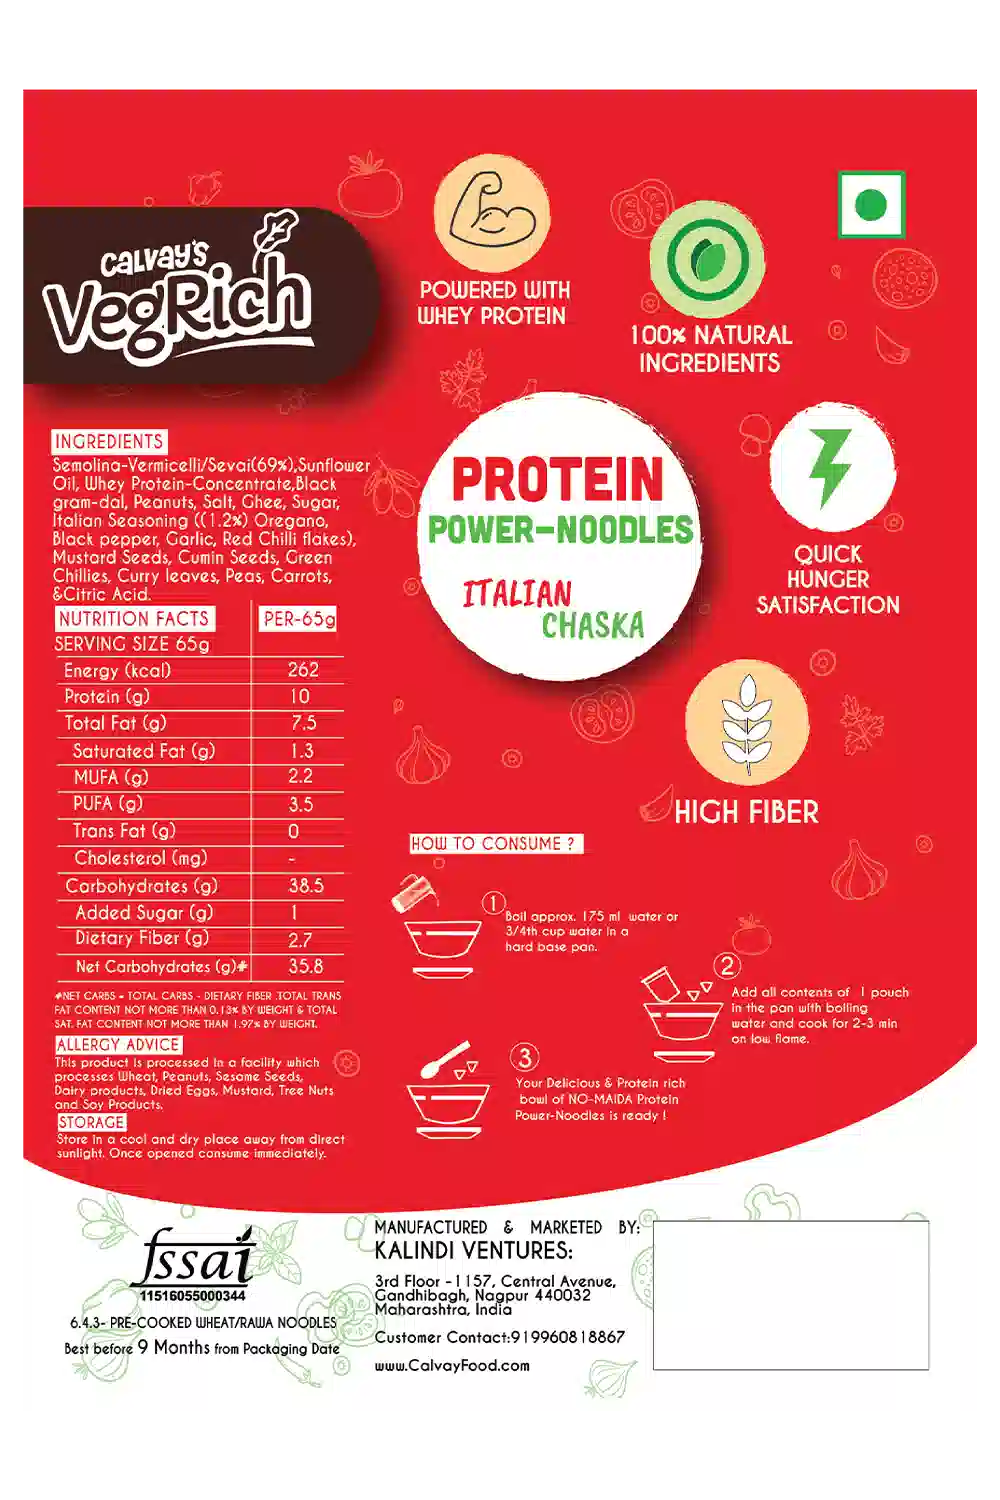 Calvay's VegRich Protein Power Noodles back view